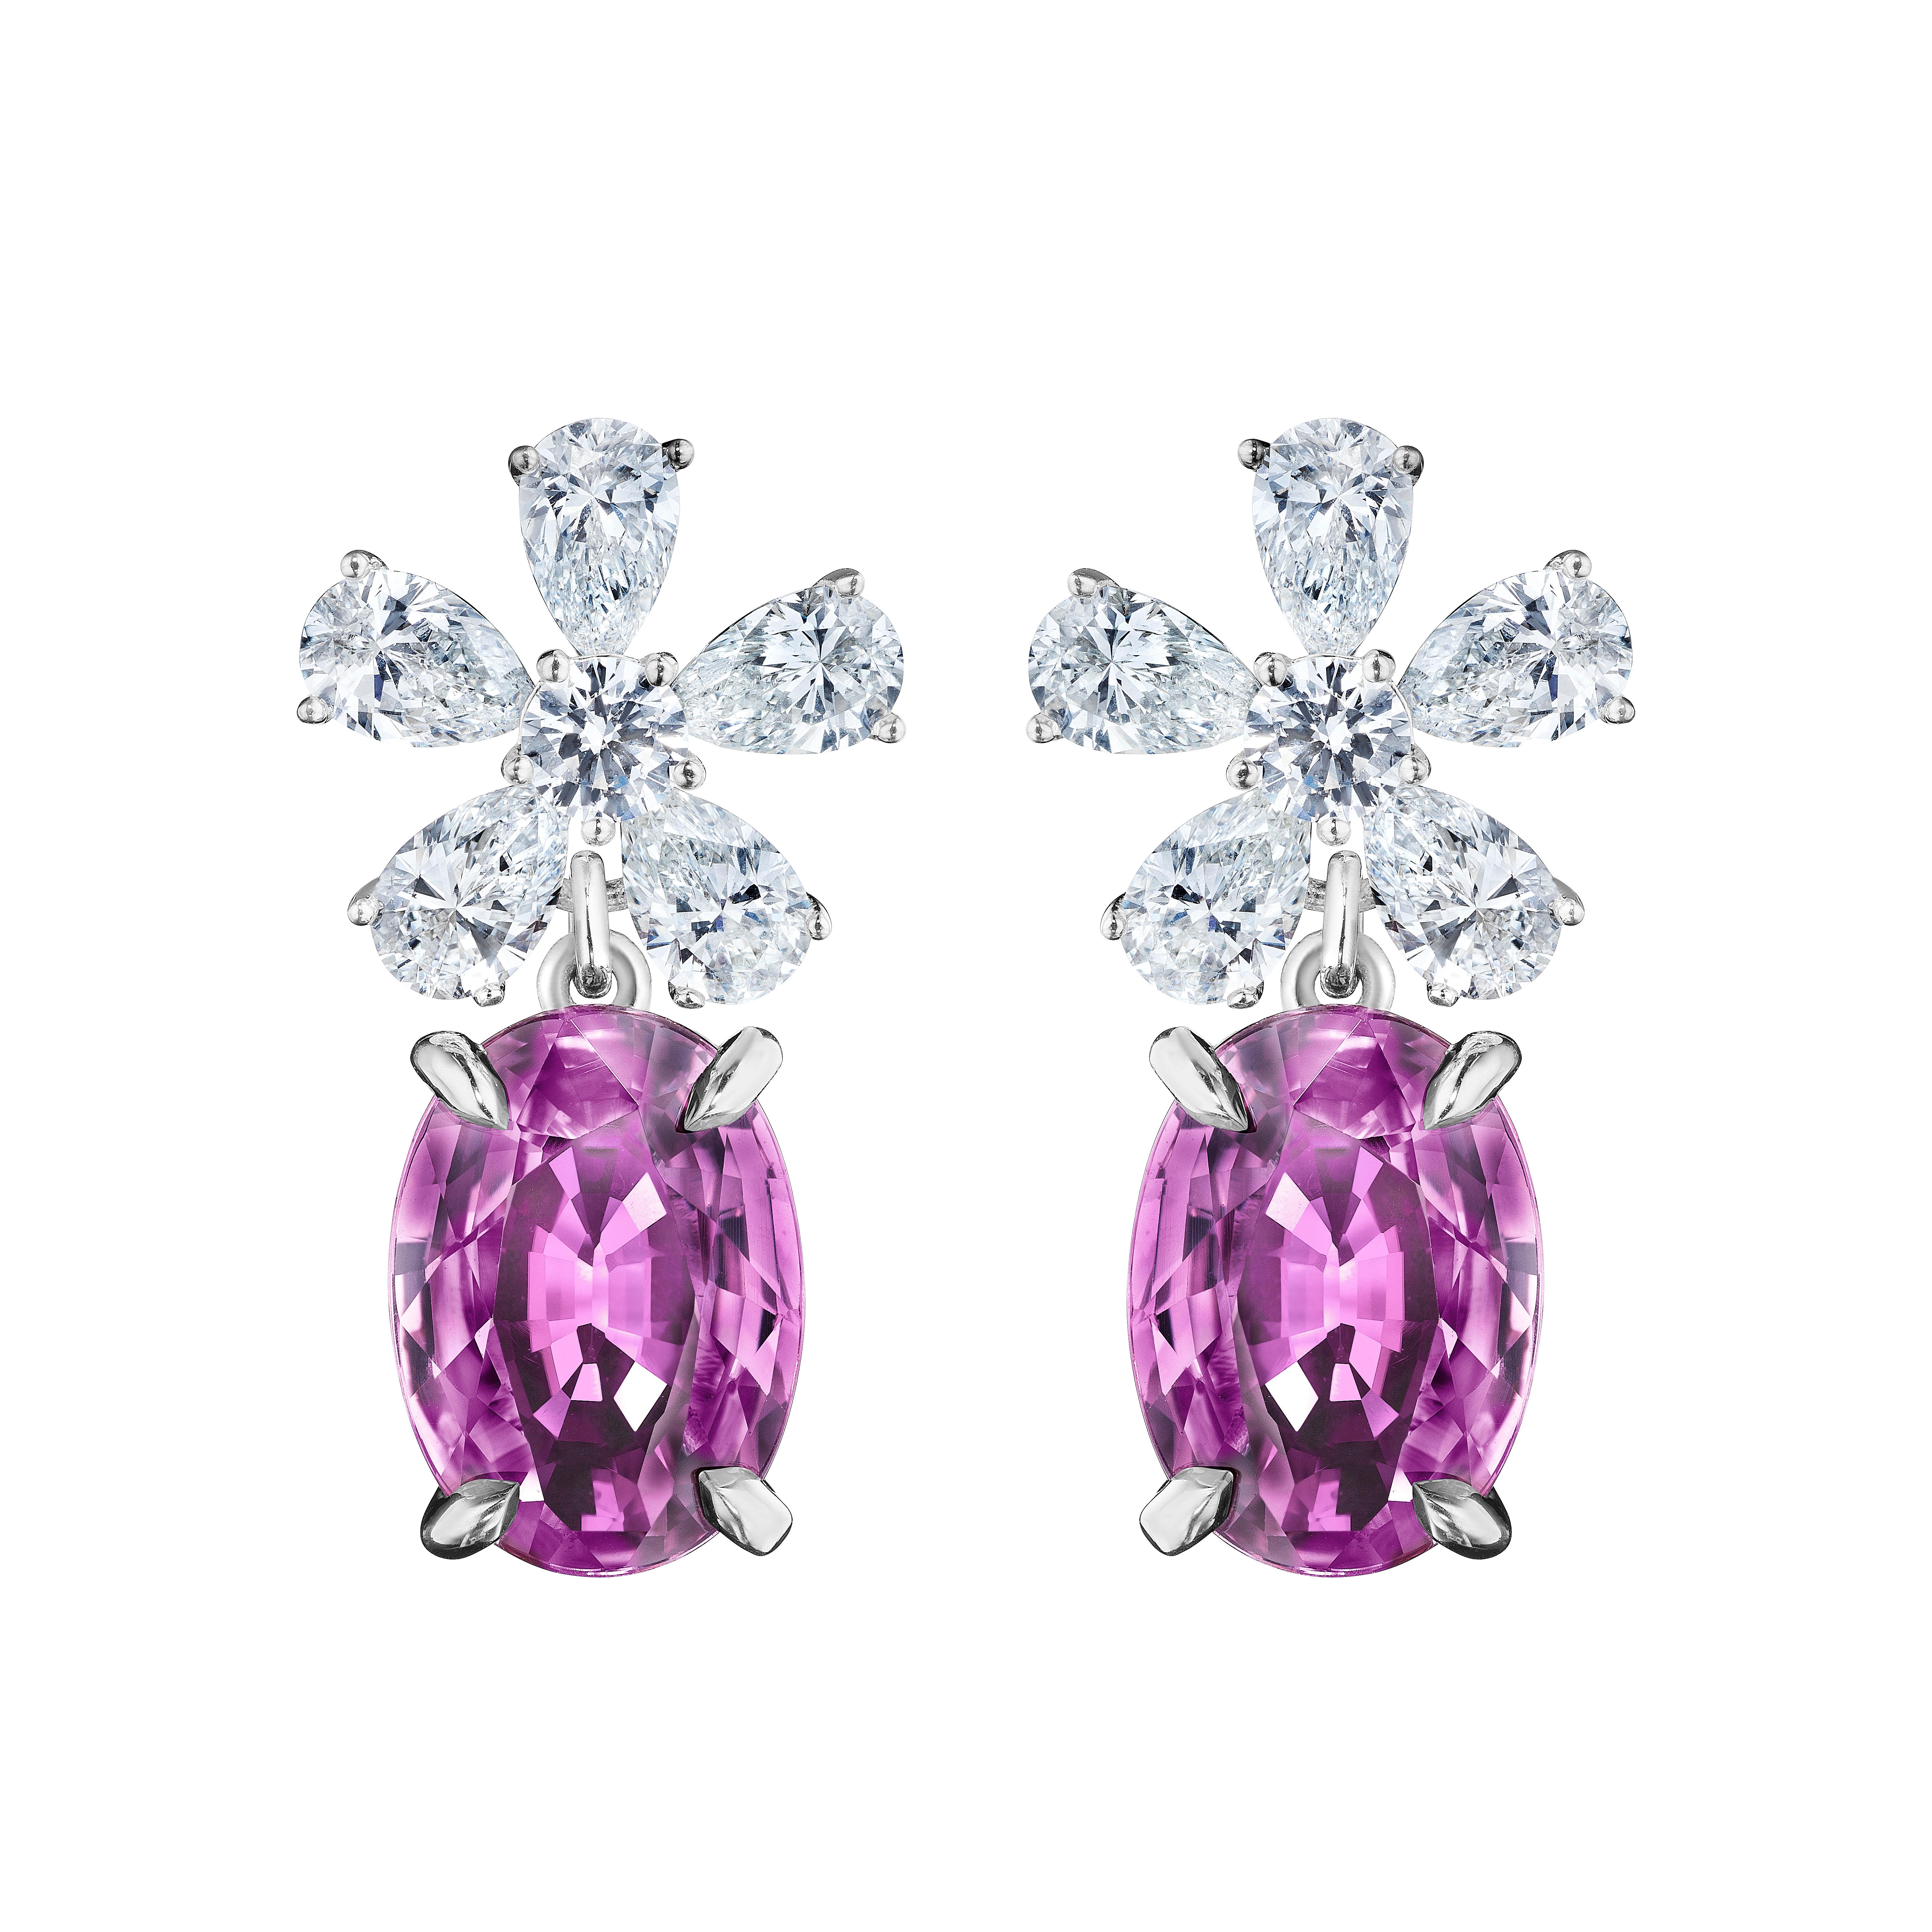 10.73ct Oval Cut Pink Sapphire & Diamond Flower Earrings in 18KT White Gold